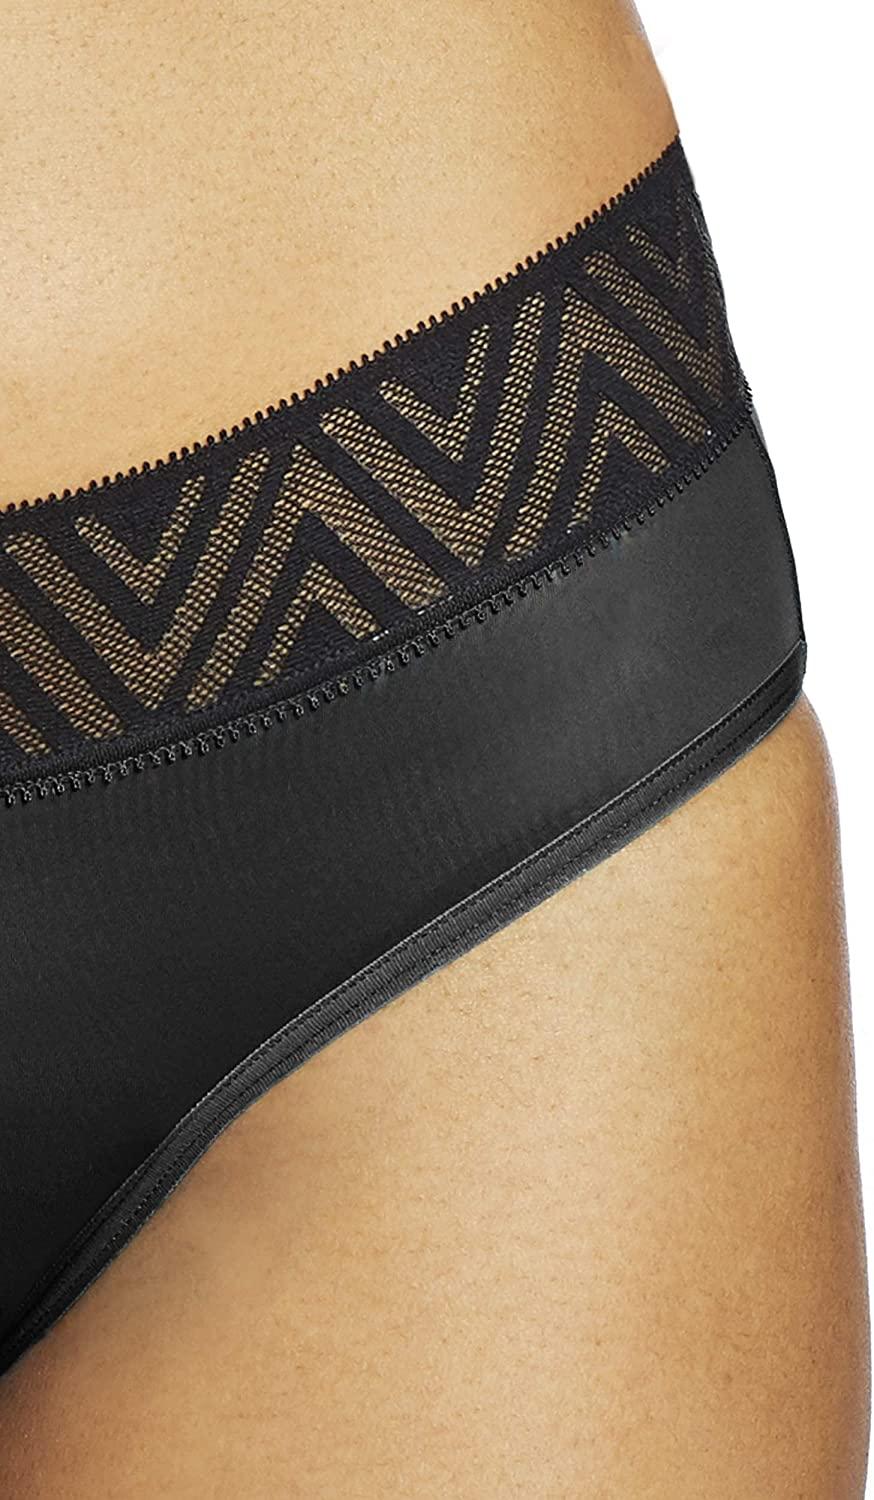 Thinx For All Women's Moderate Absorbency Bikini Period Underwear